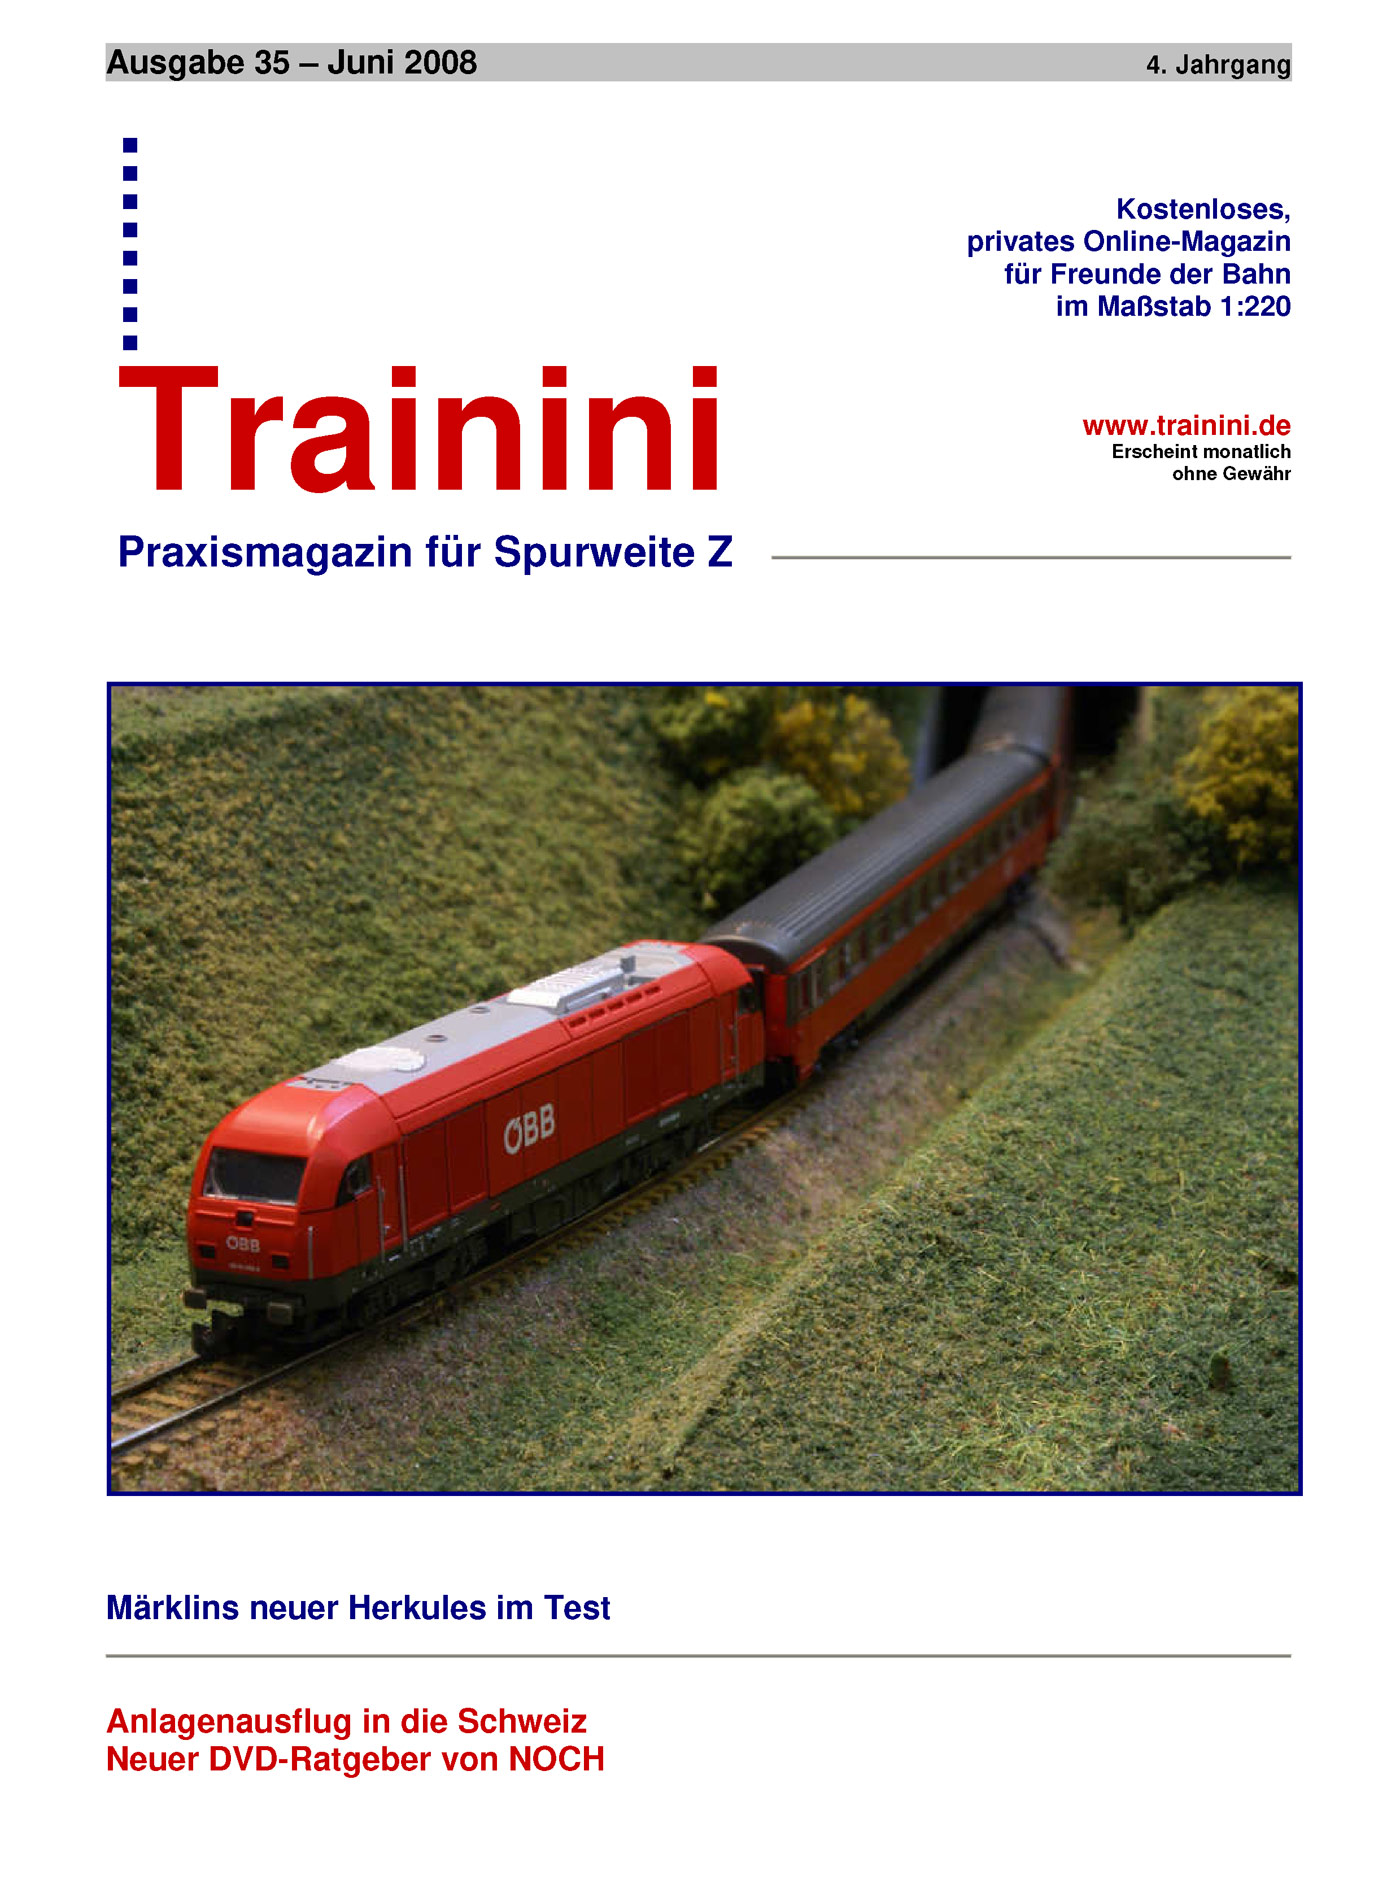 Trainini Ausgabe Juni 2008